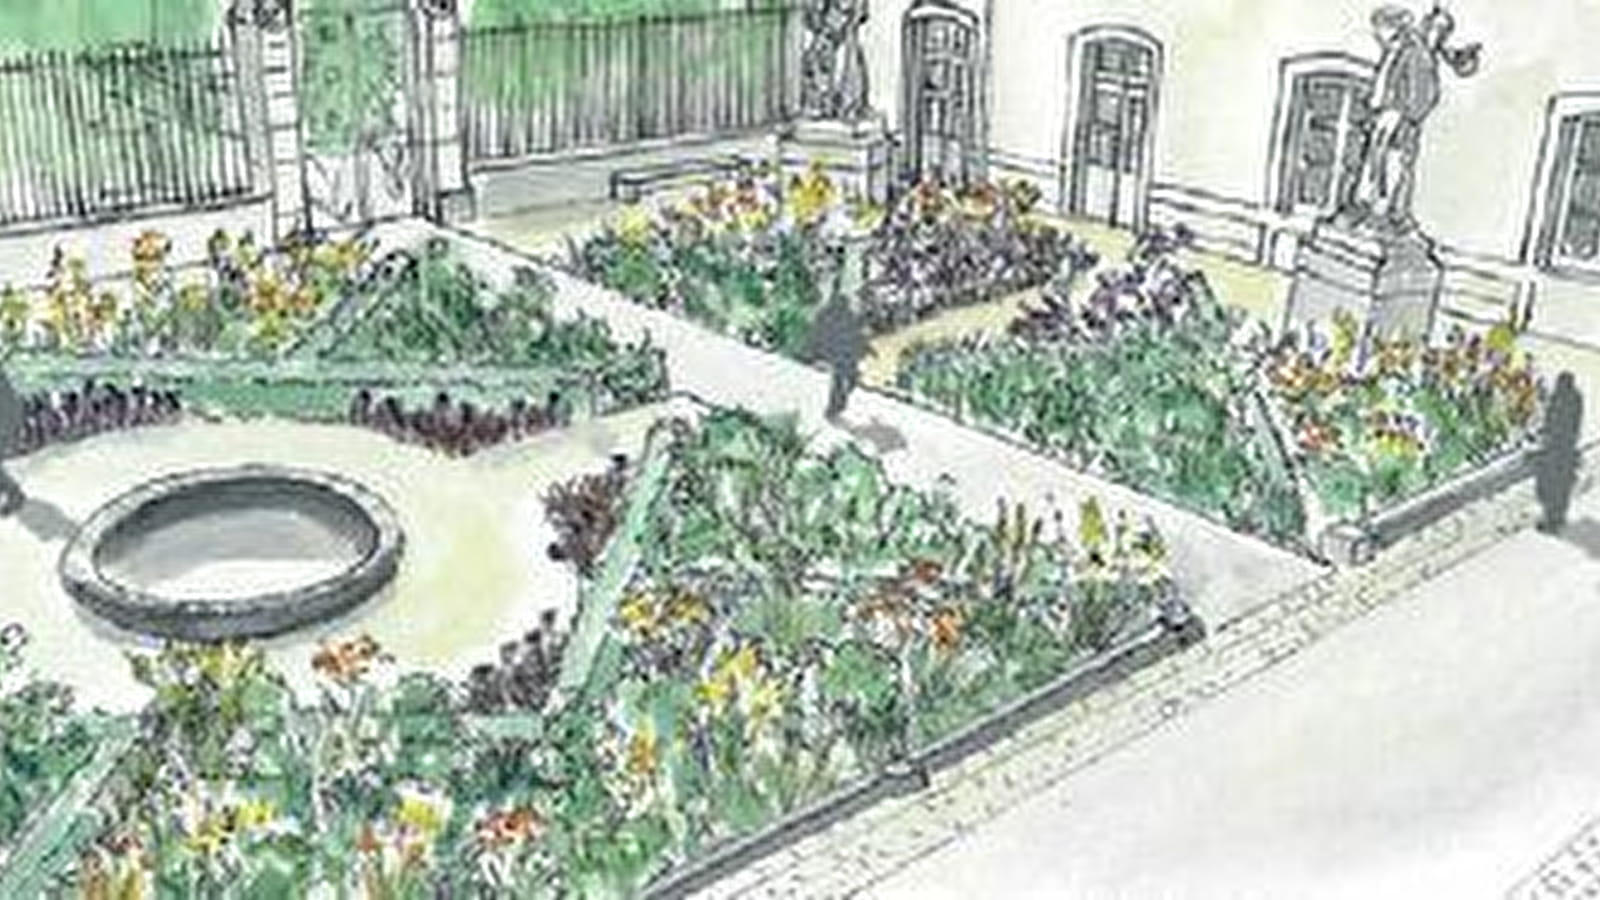 Hôtel-Dieu - Hospices de Beaune - Rendez-vous aux jardins - Echos polychromes, ein Krankenhausgarten